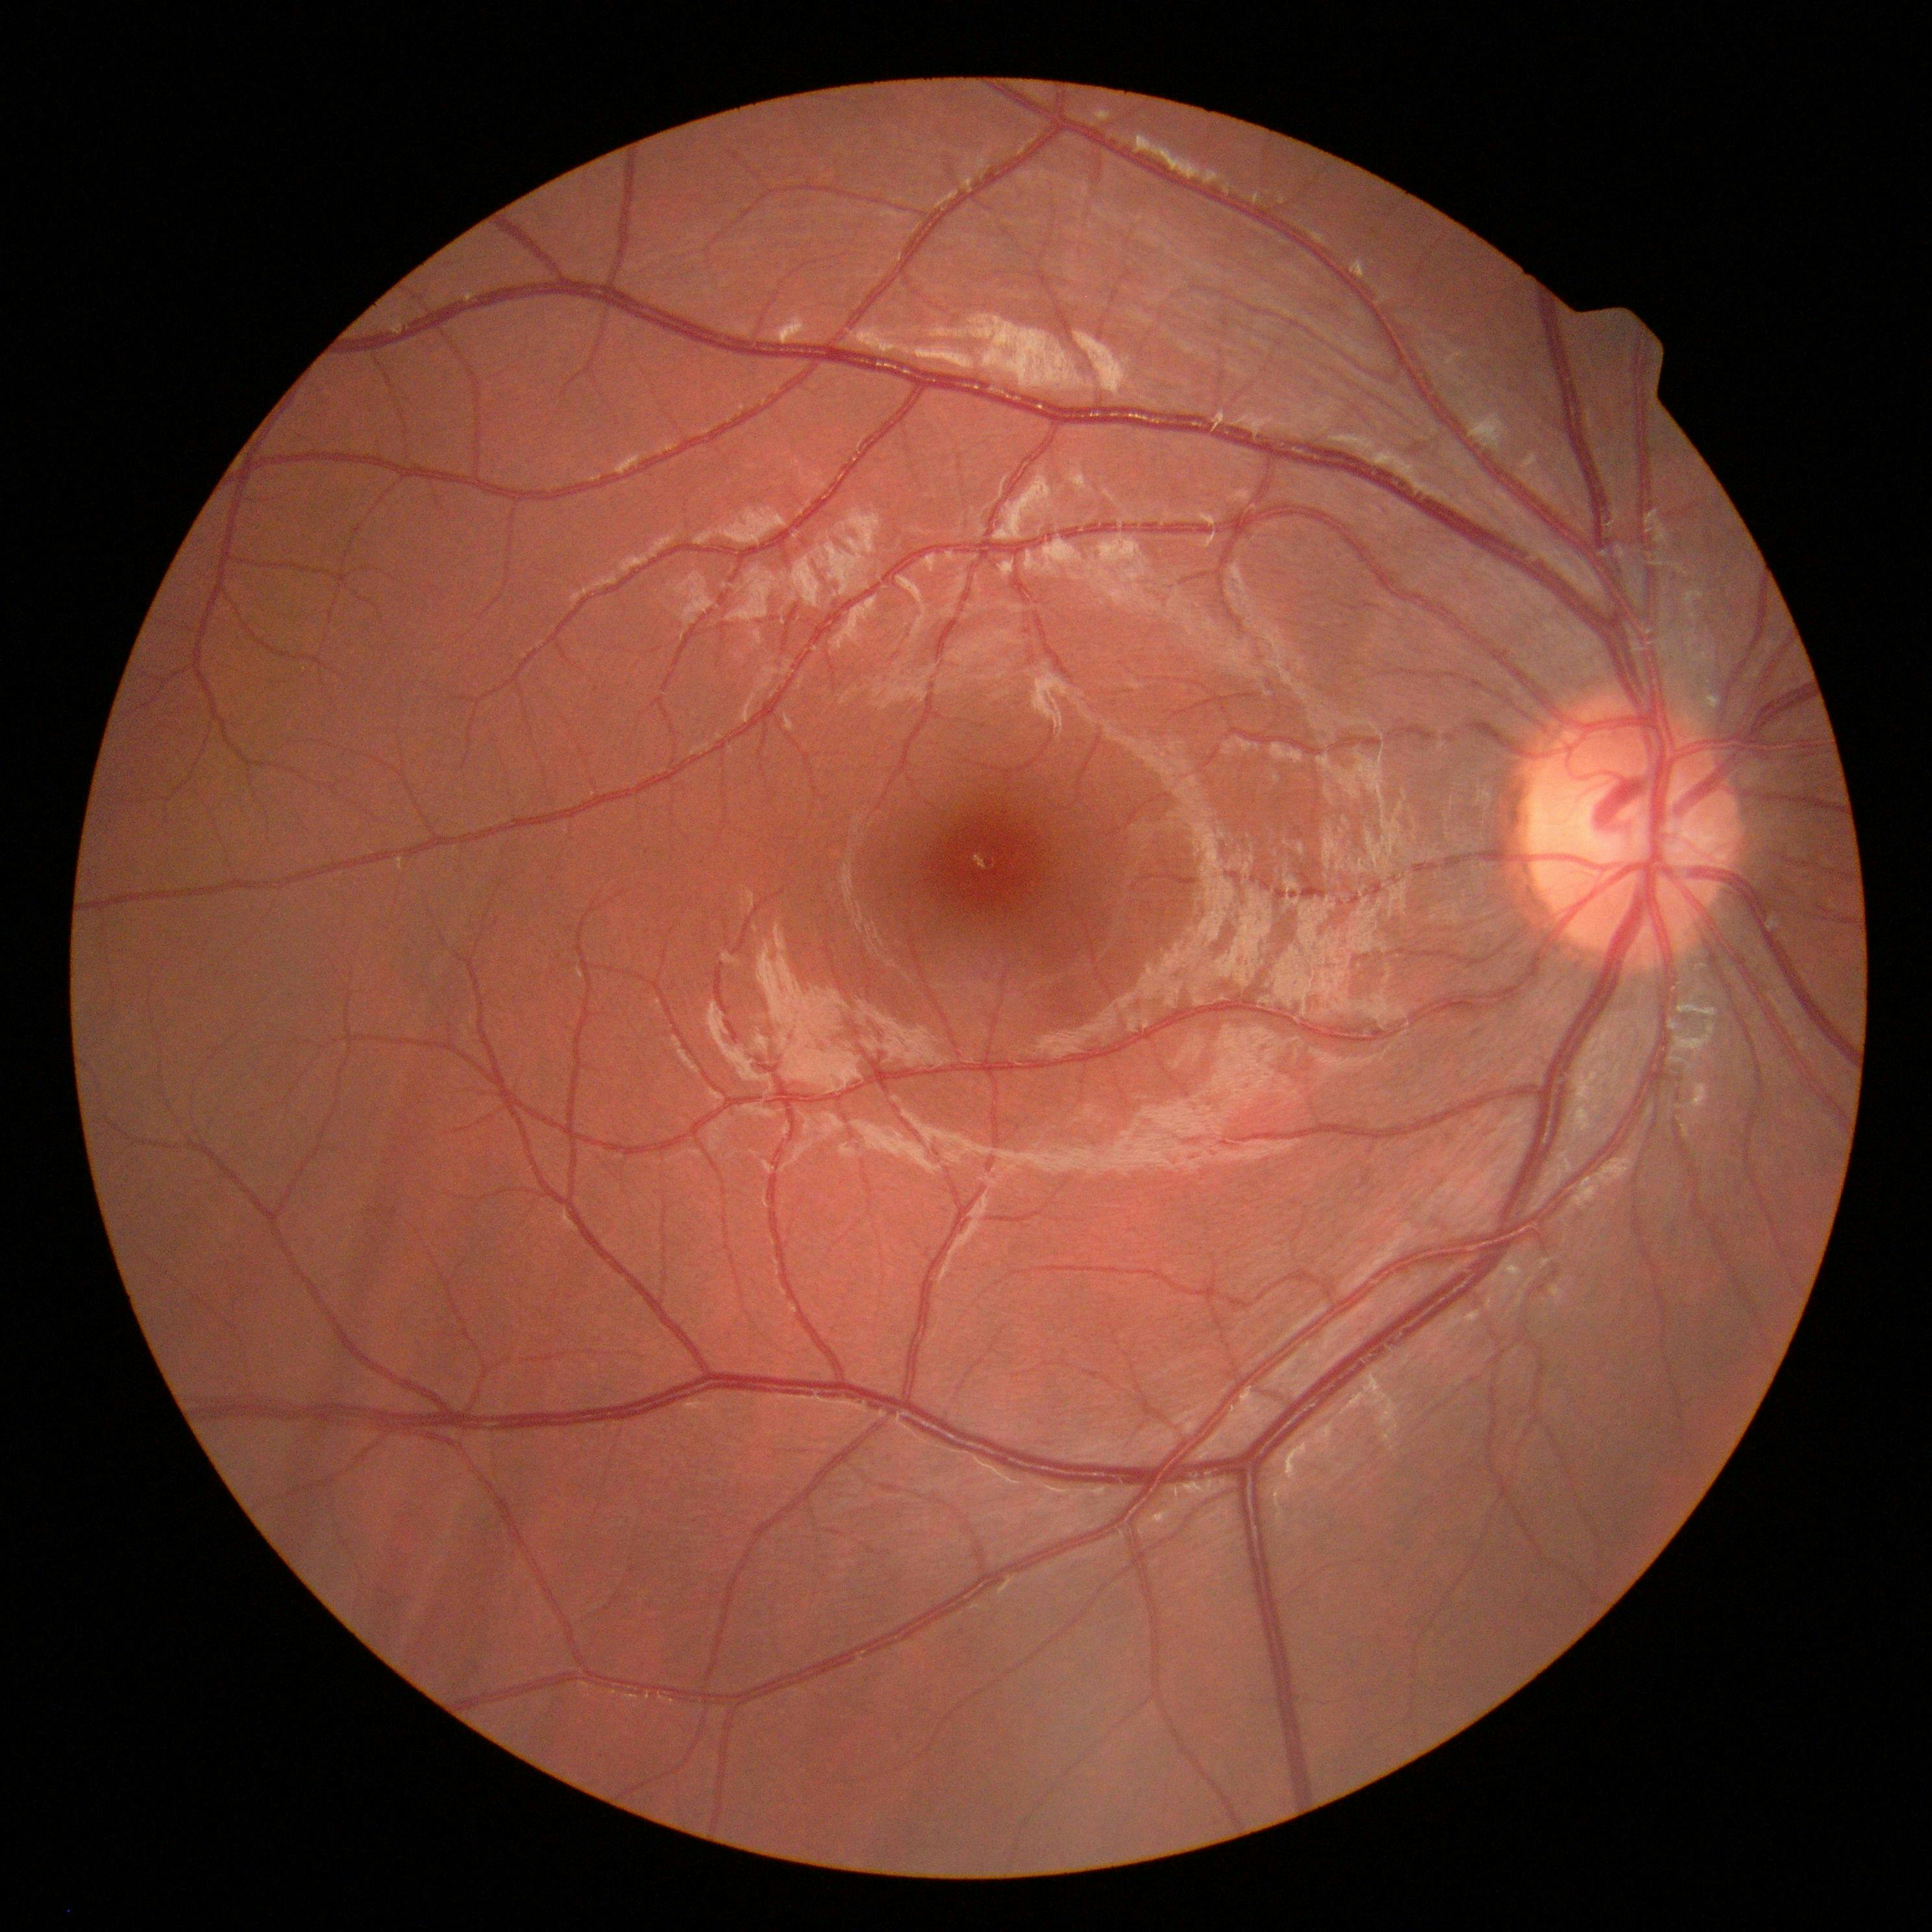 scan of eye showing macular oedema